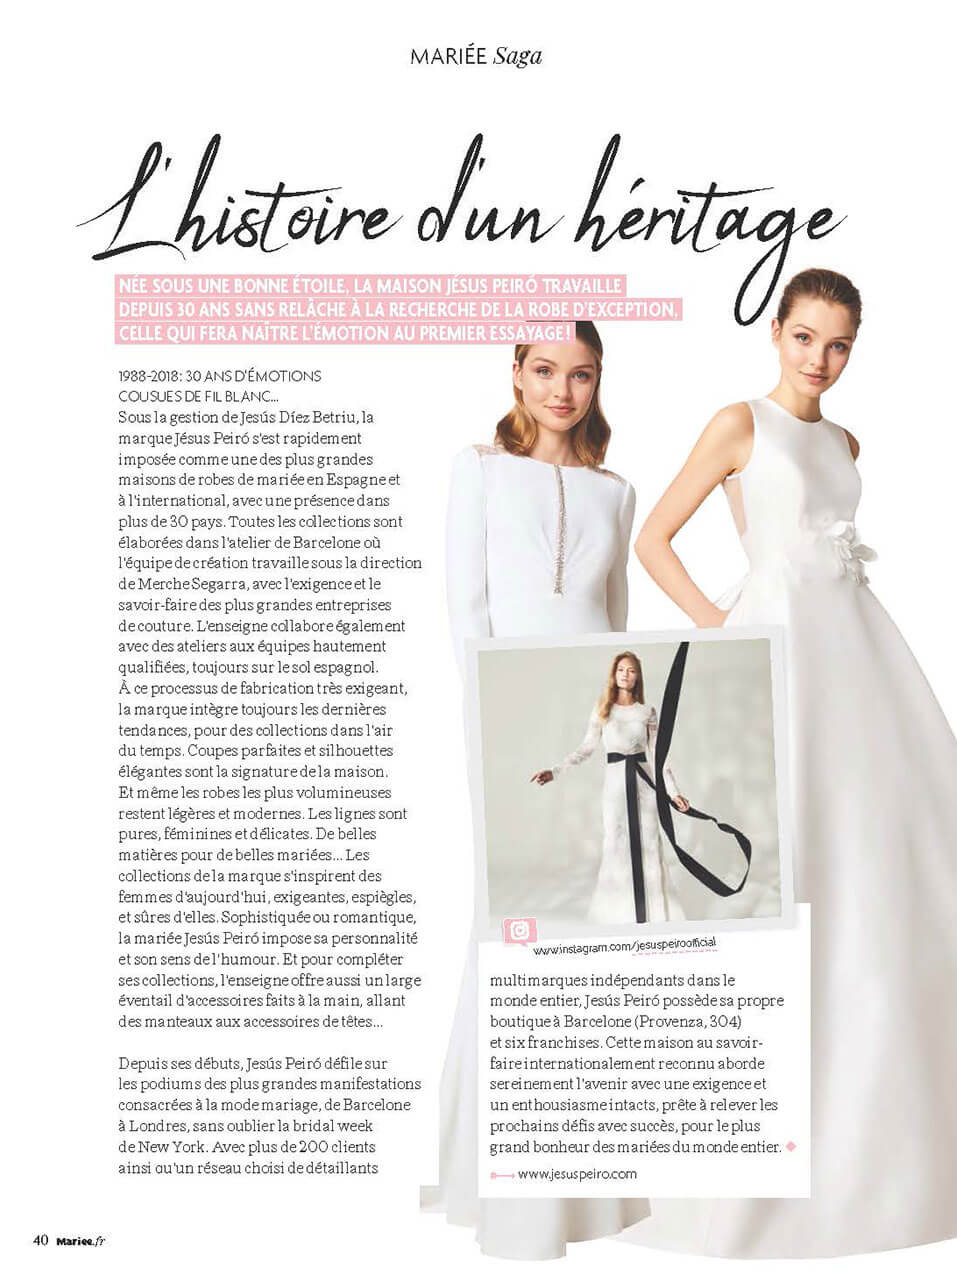 Mariée Magazine 111